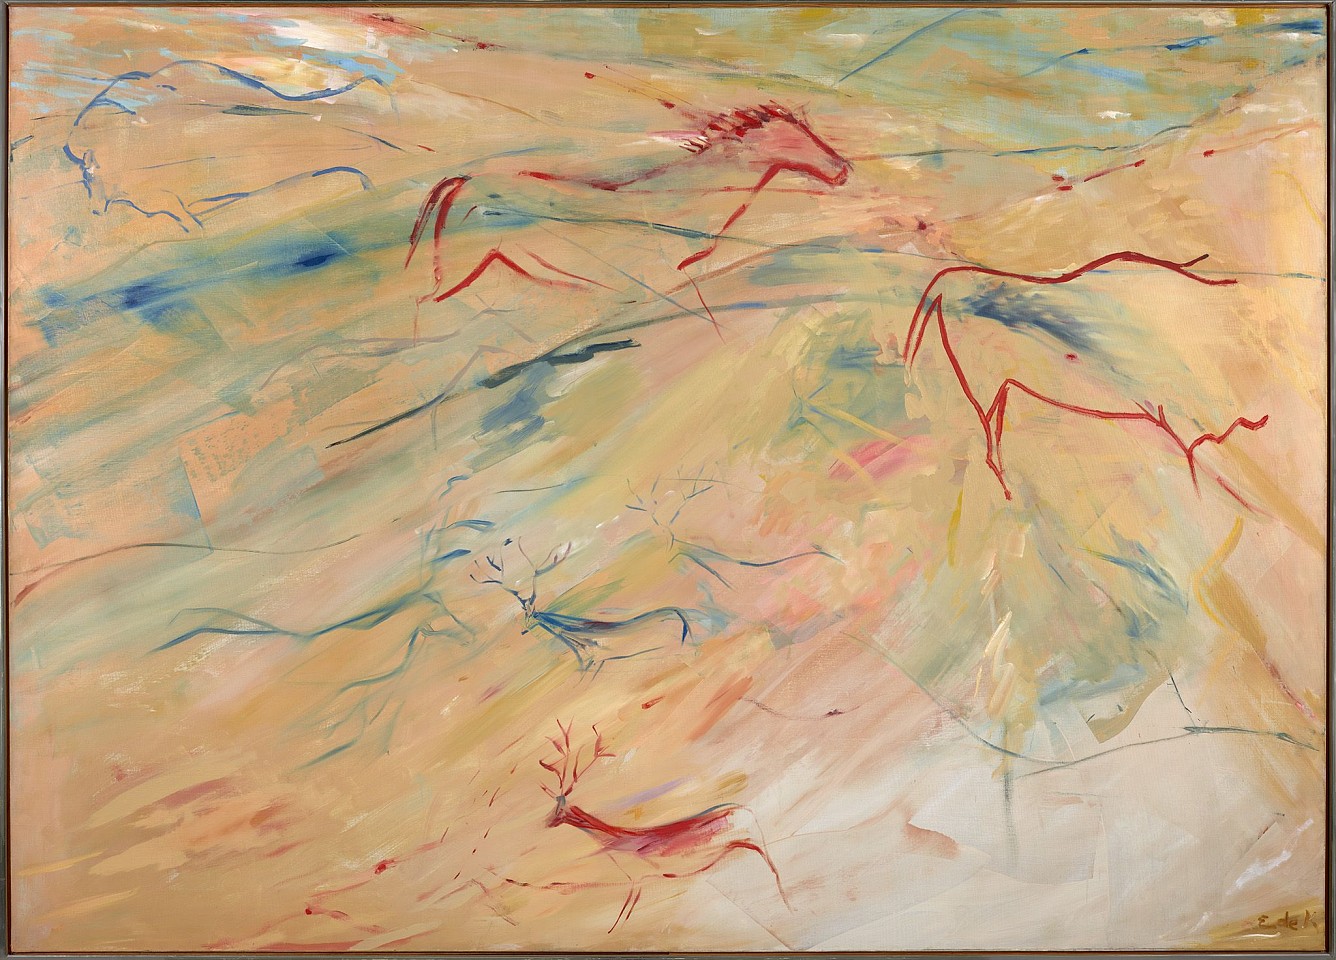 Elaine de Kooning, Cave #54, Sand Wall | SOLD, 1985
Oil on linen, 77 3/4 x 108 1/2 in. (197.5 x 275.6 cm)
EDEK-00022